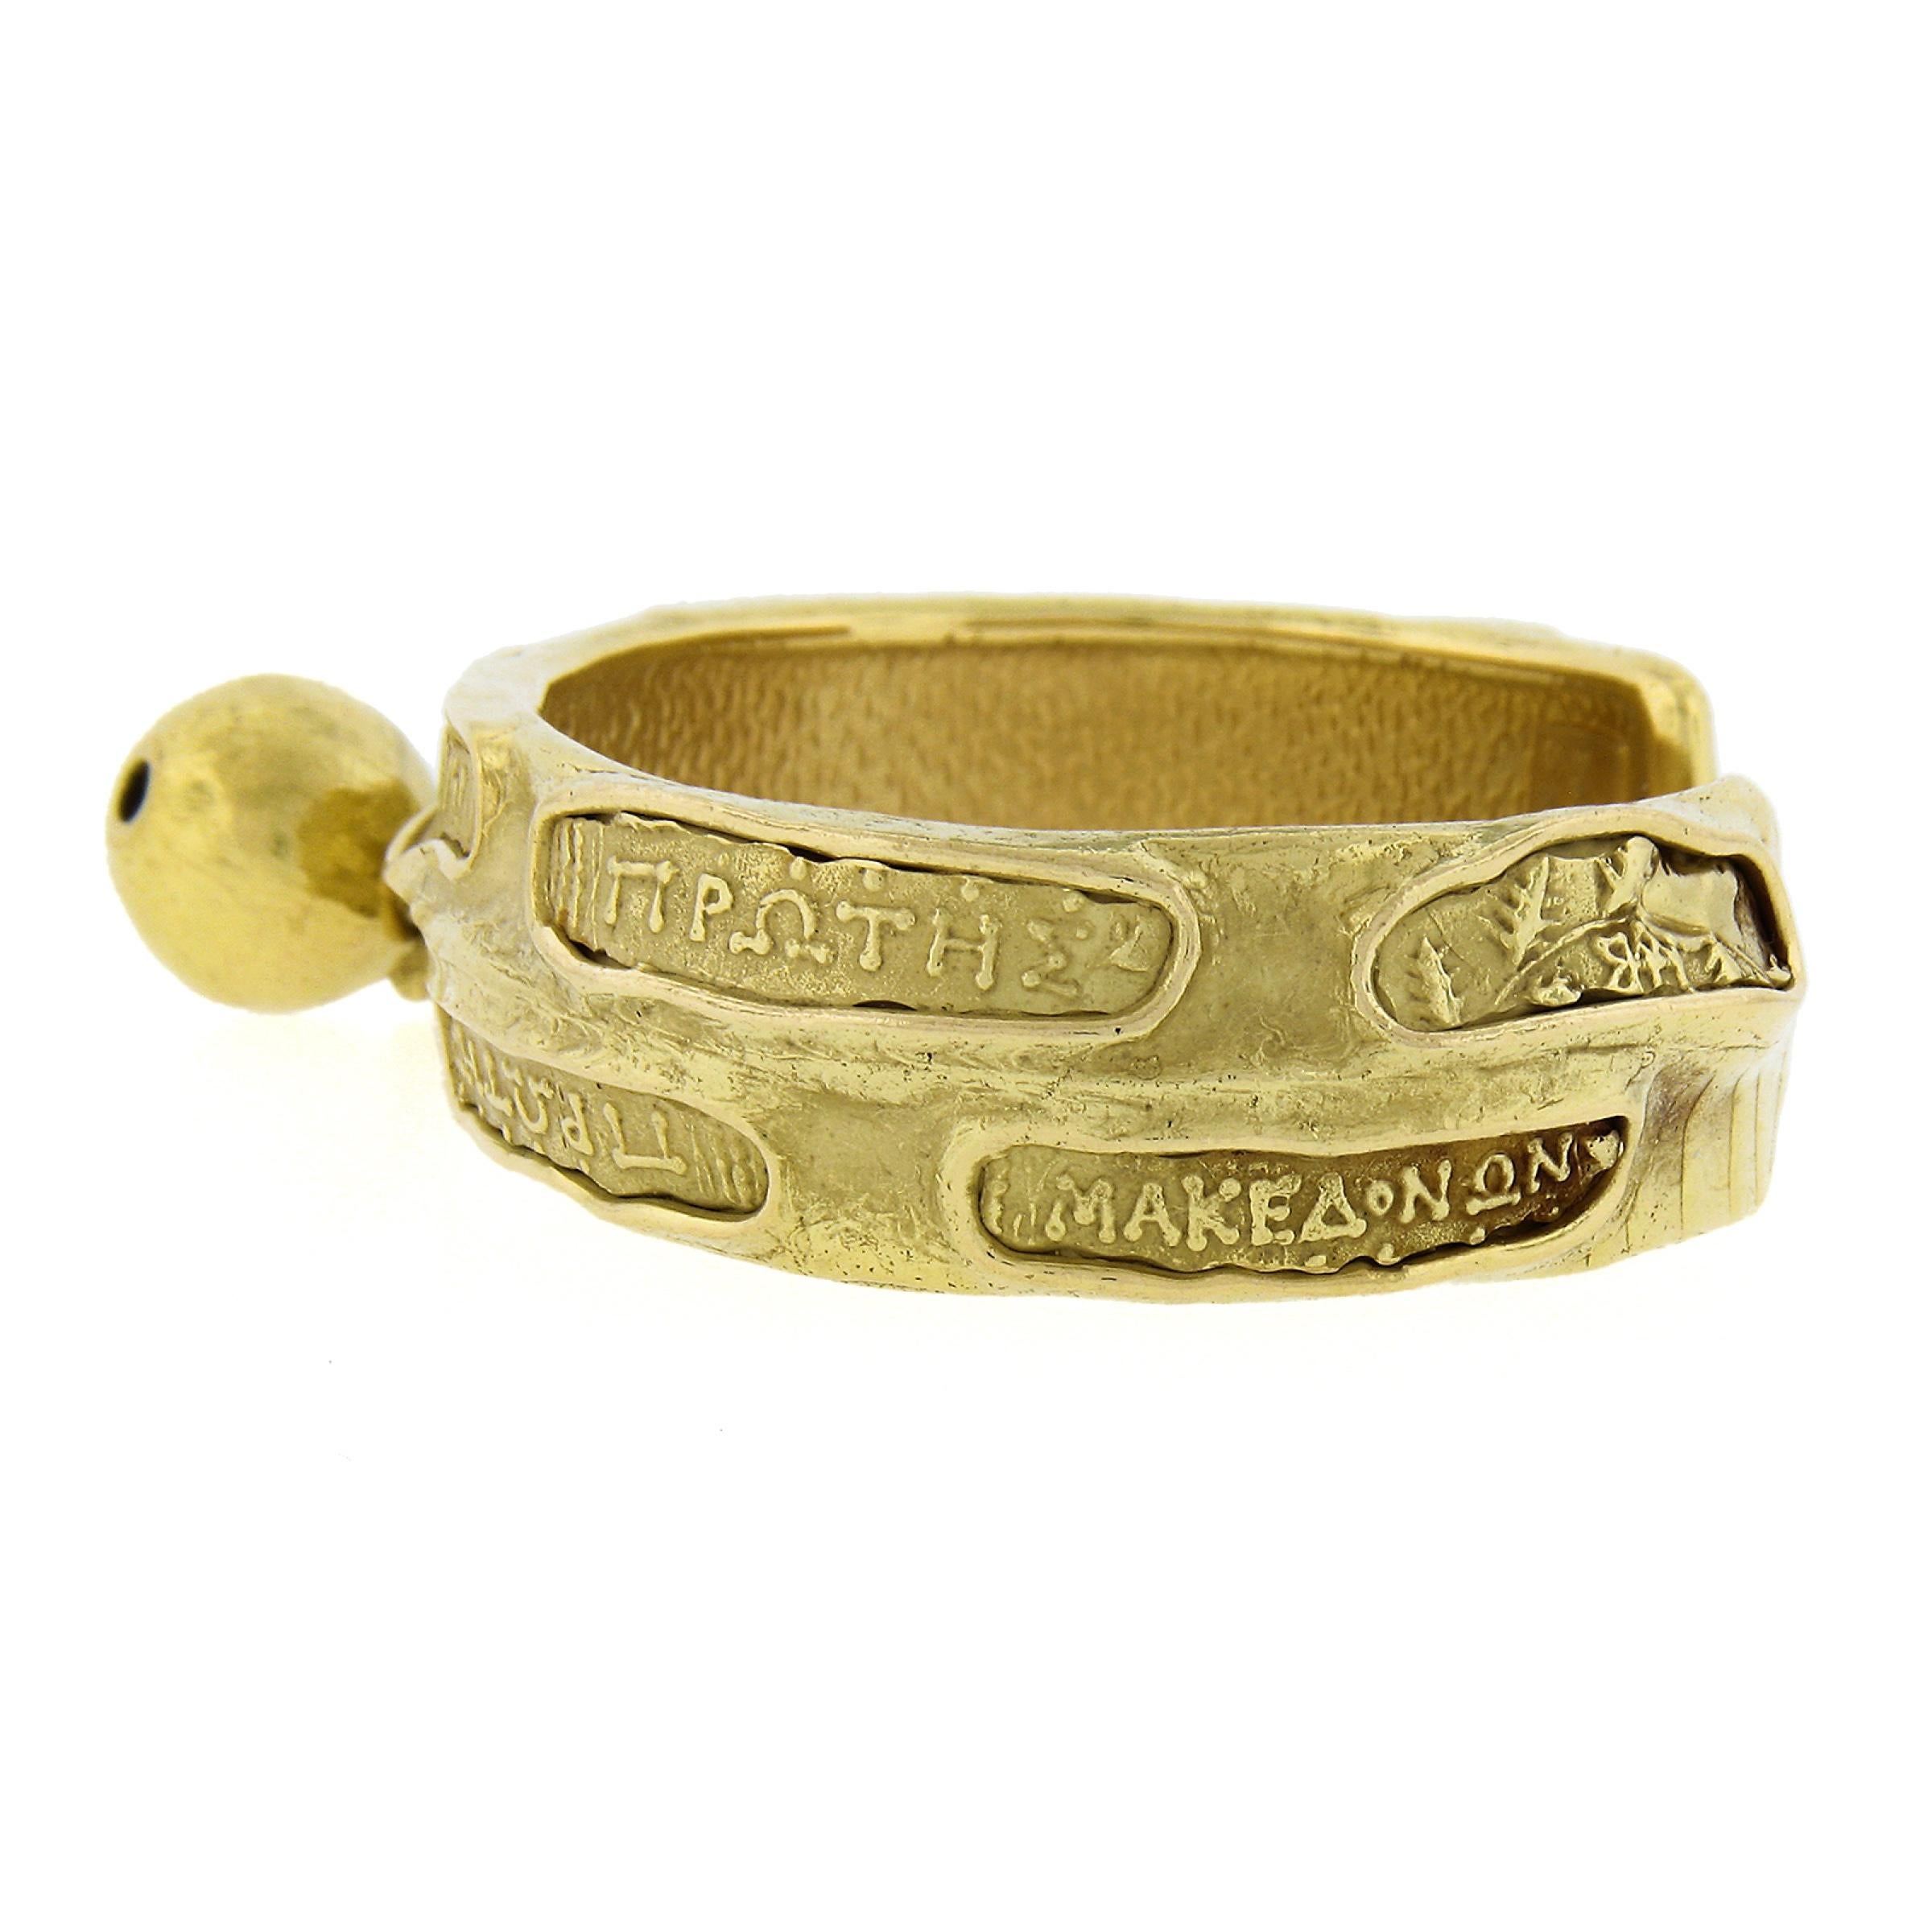 Denise Roberge 18k Yellow Gold Greek Writing Open Cuff Bracelet w/ Dangle Ball For Sale 2